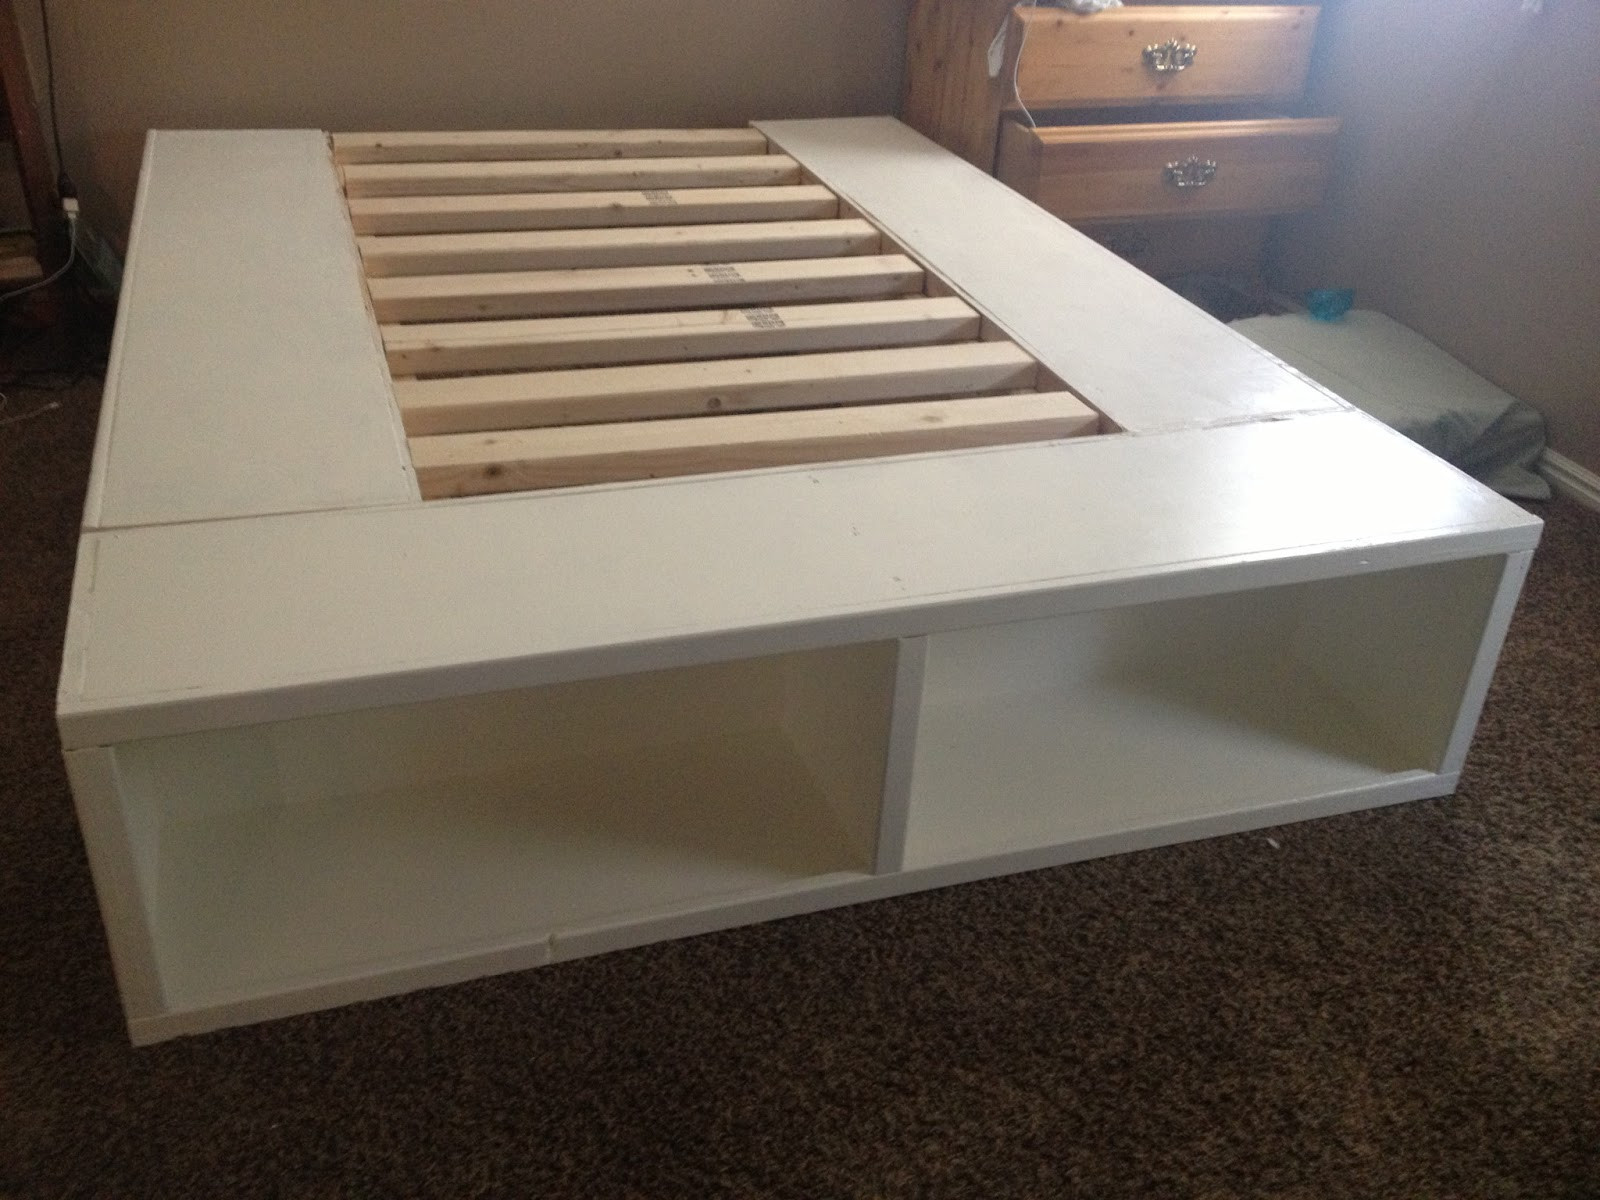 Best ideas about DIY Platform Storage Bed
. Save or Pin DIY Storage Bed Now.